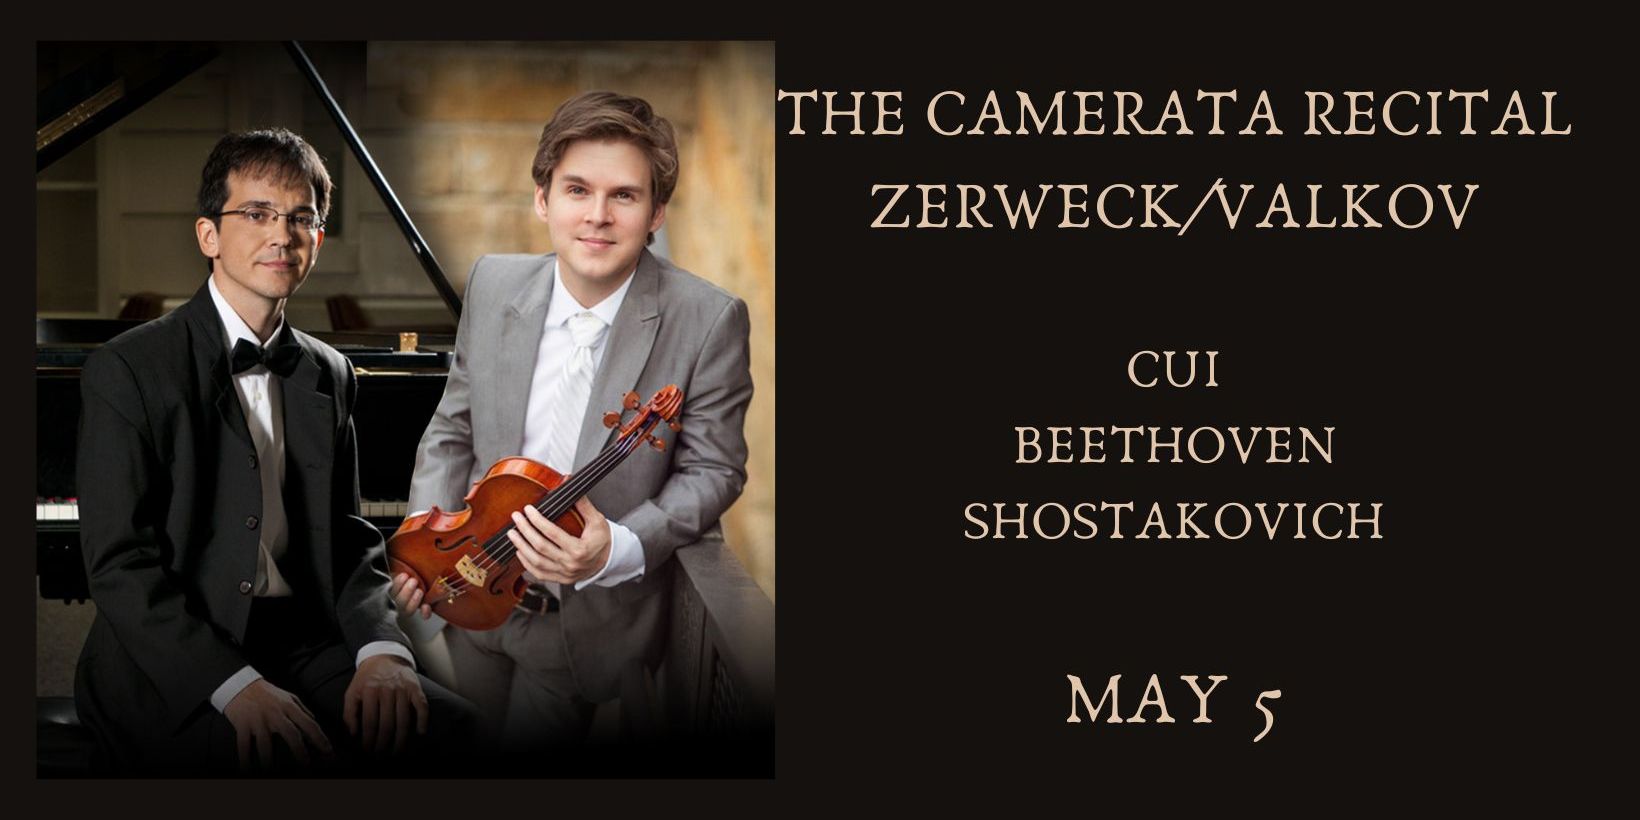 Zerweck/Valkov Violin Recital promotional image